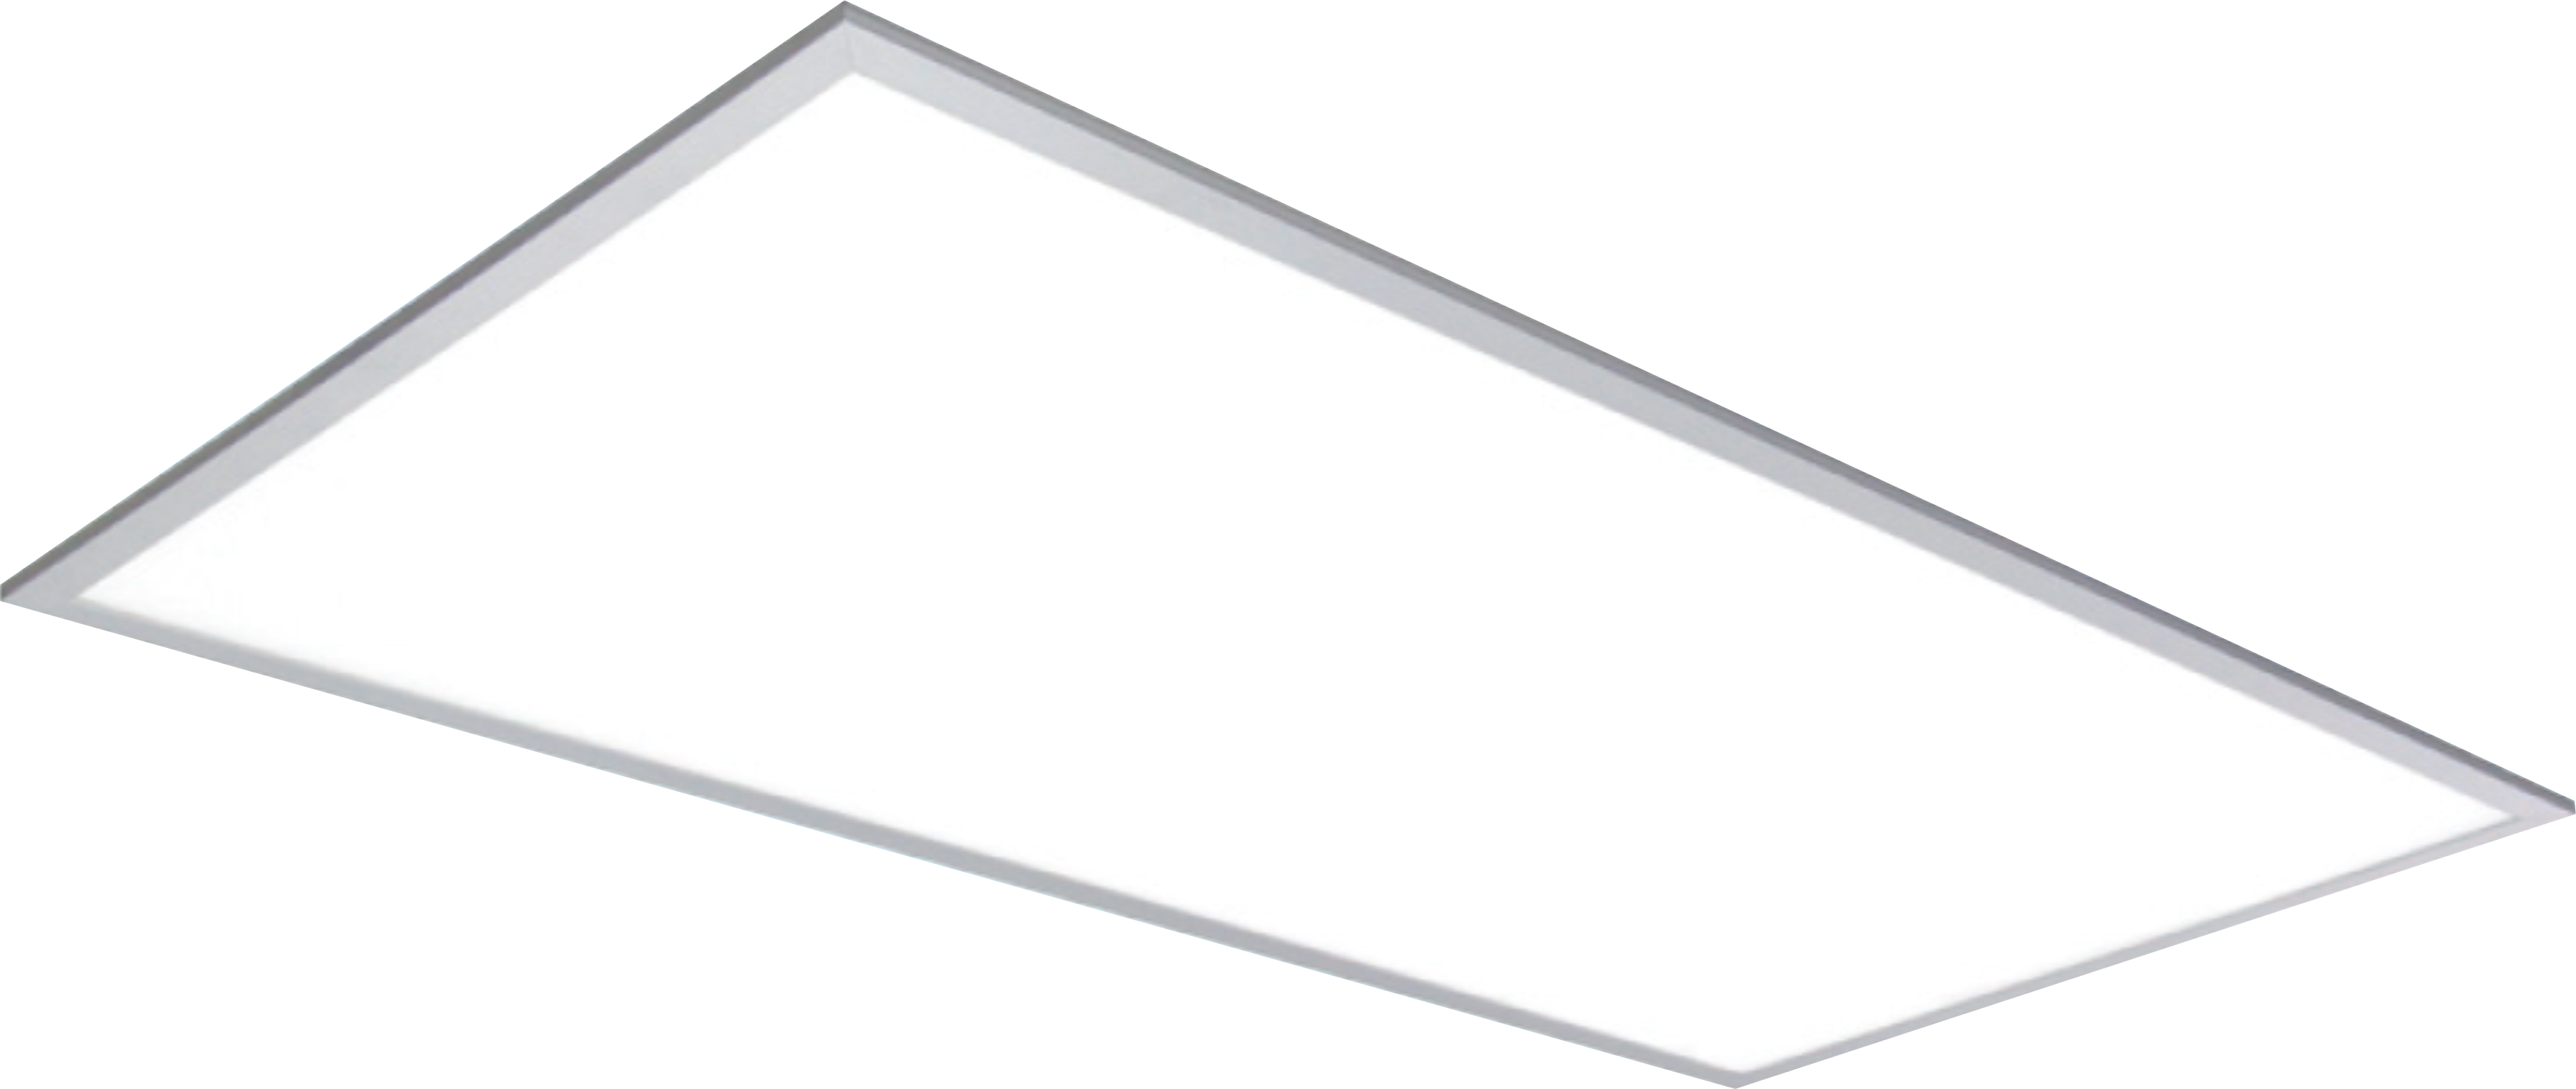 LED Panel Light PNG File